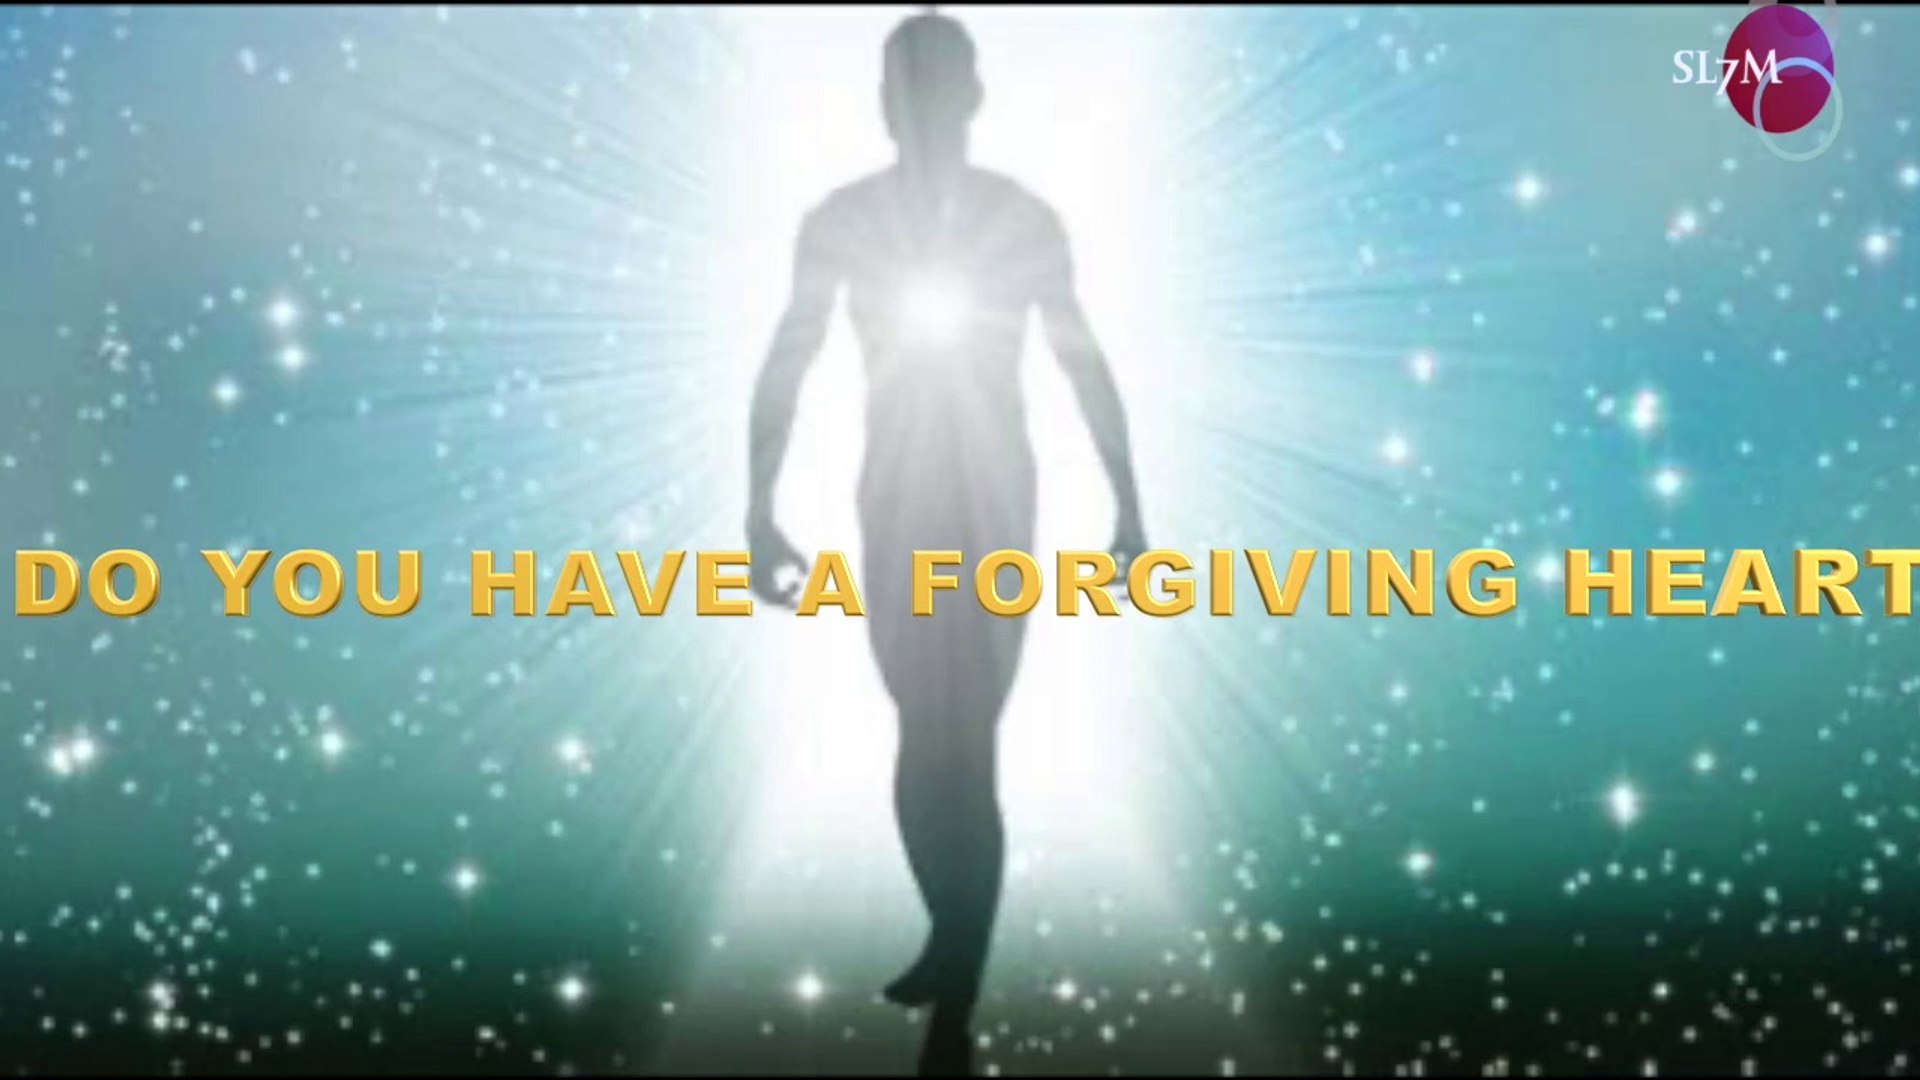 DO YOU HAVE A FORGIVING HEART